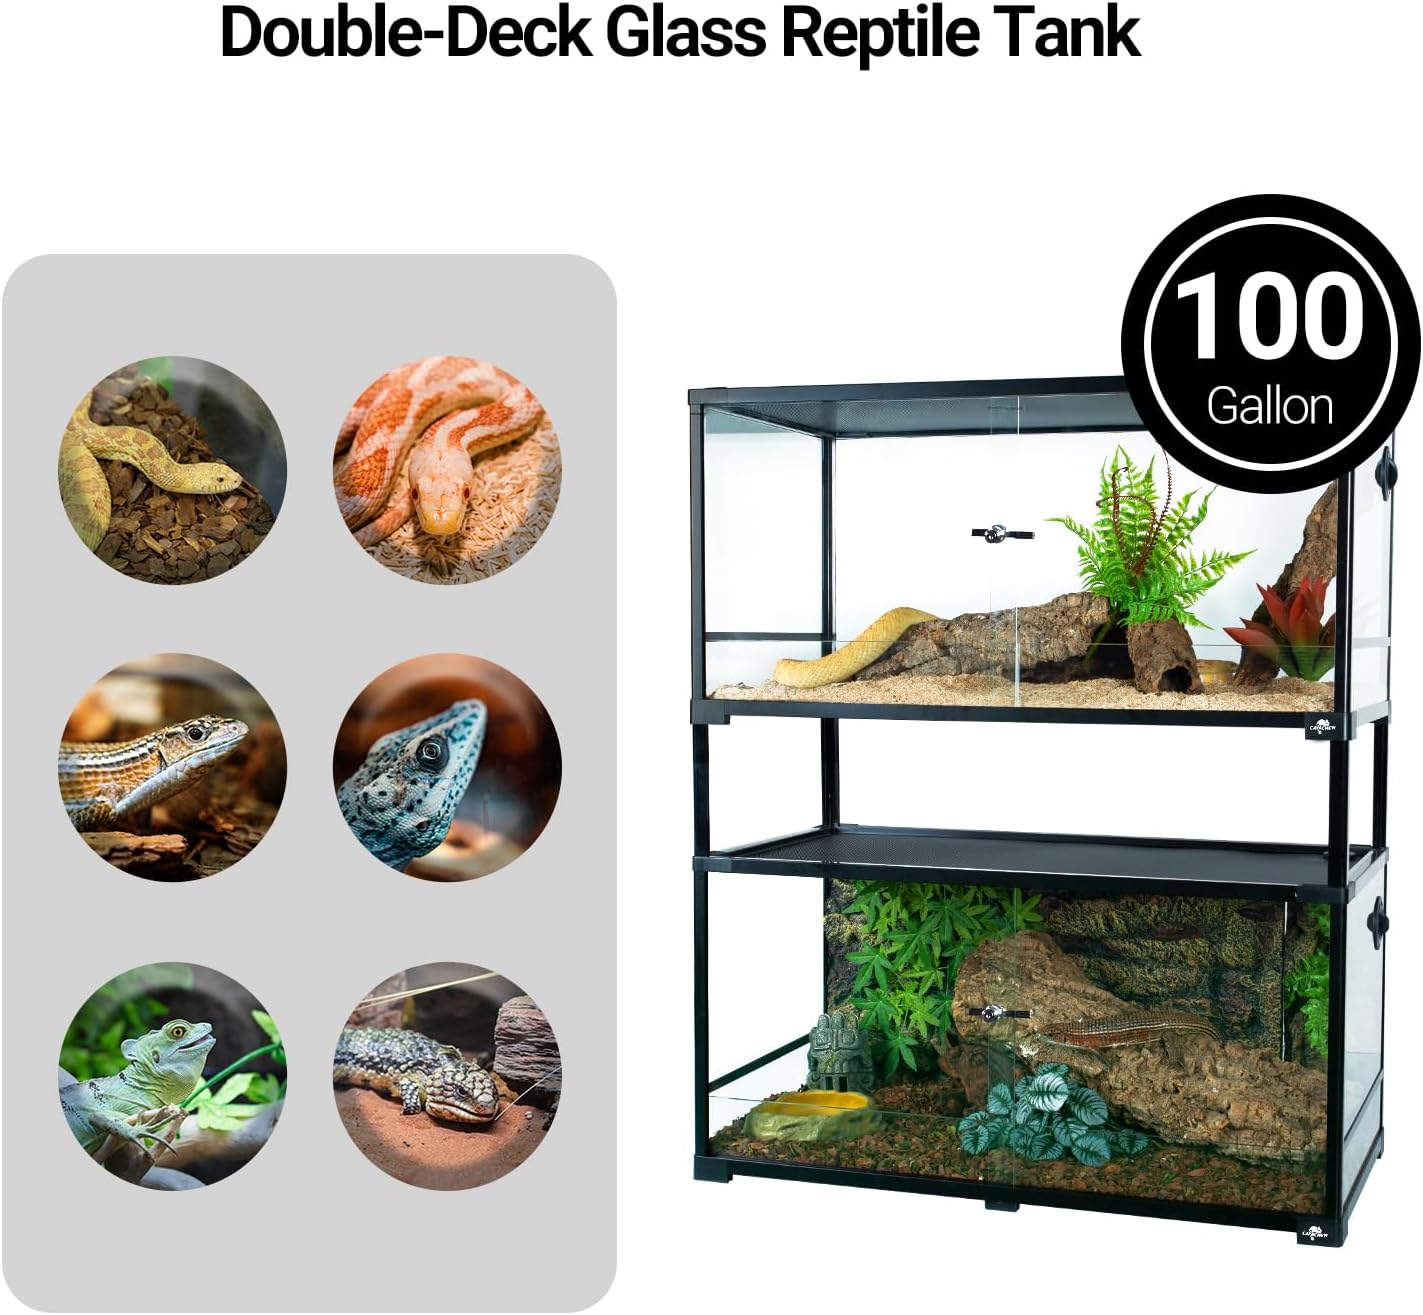 134 Gallon Double-Deck Reptile Tank 36 x 18 x 44 Tall Reptile